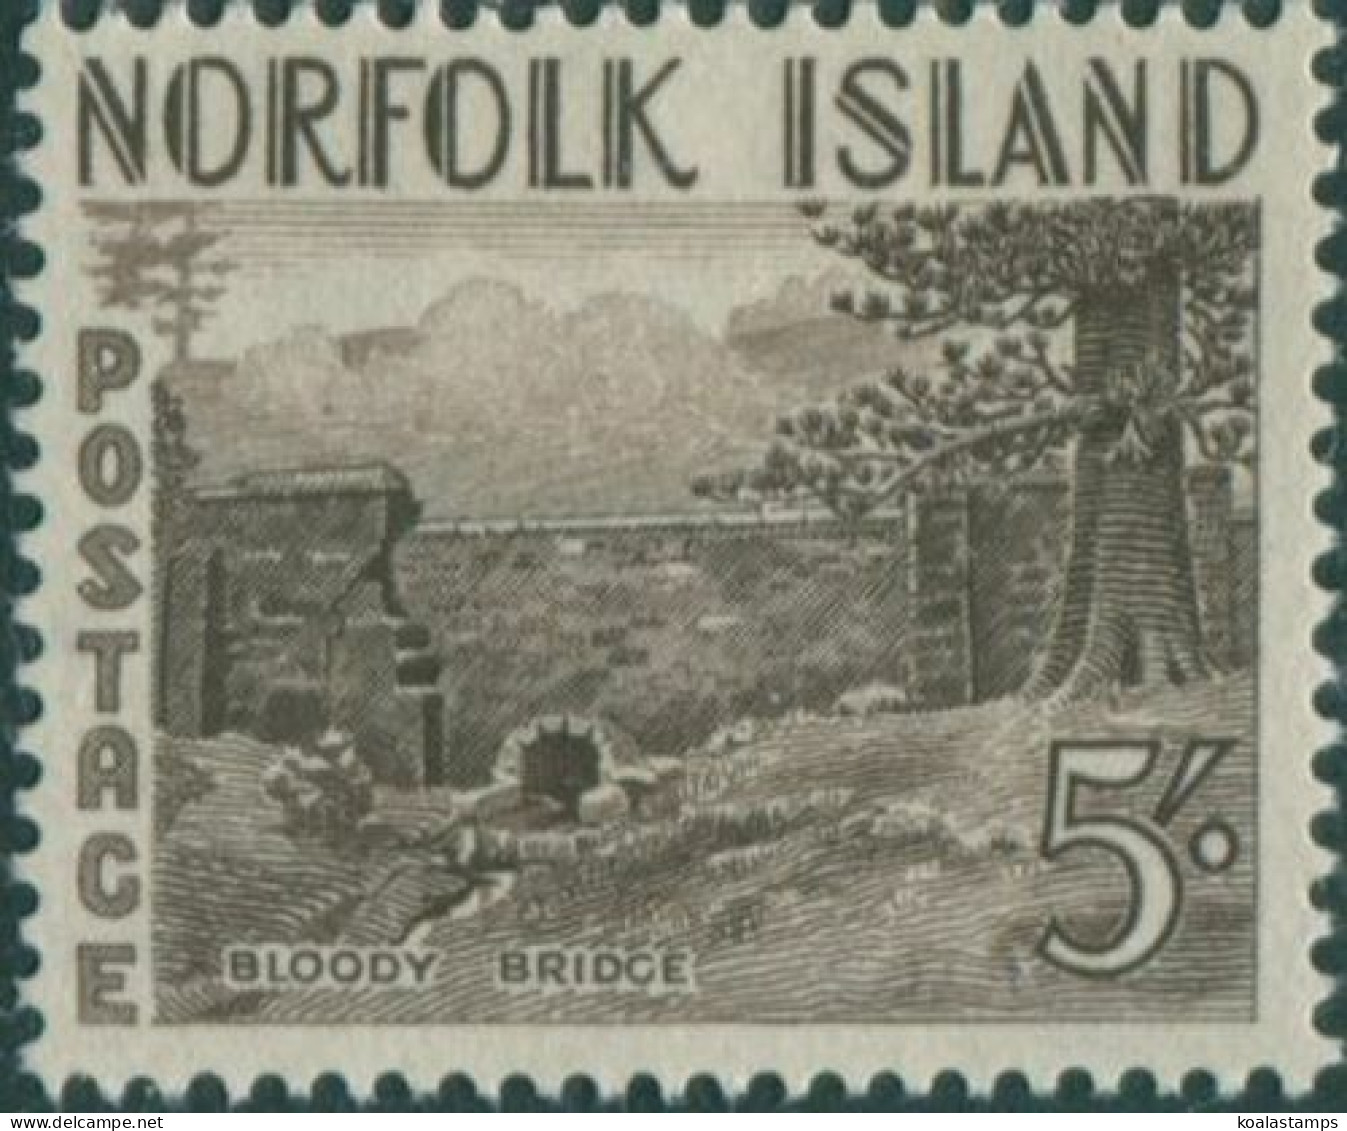 Norfolk Island 1953 SG18 5/- Brown Bloody Bridge MNH - Norfolk Island